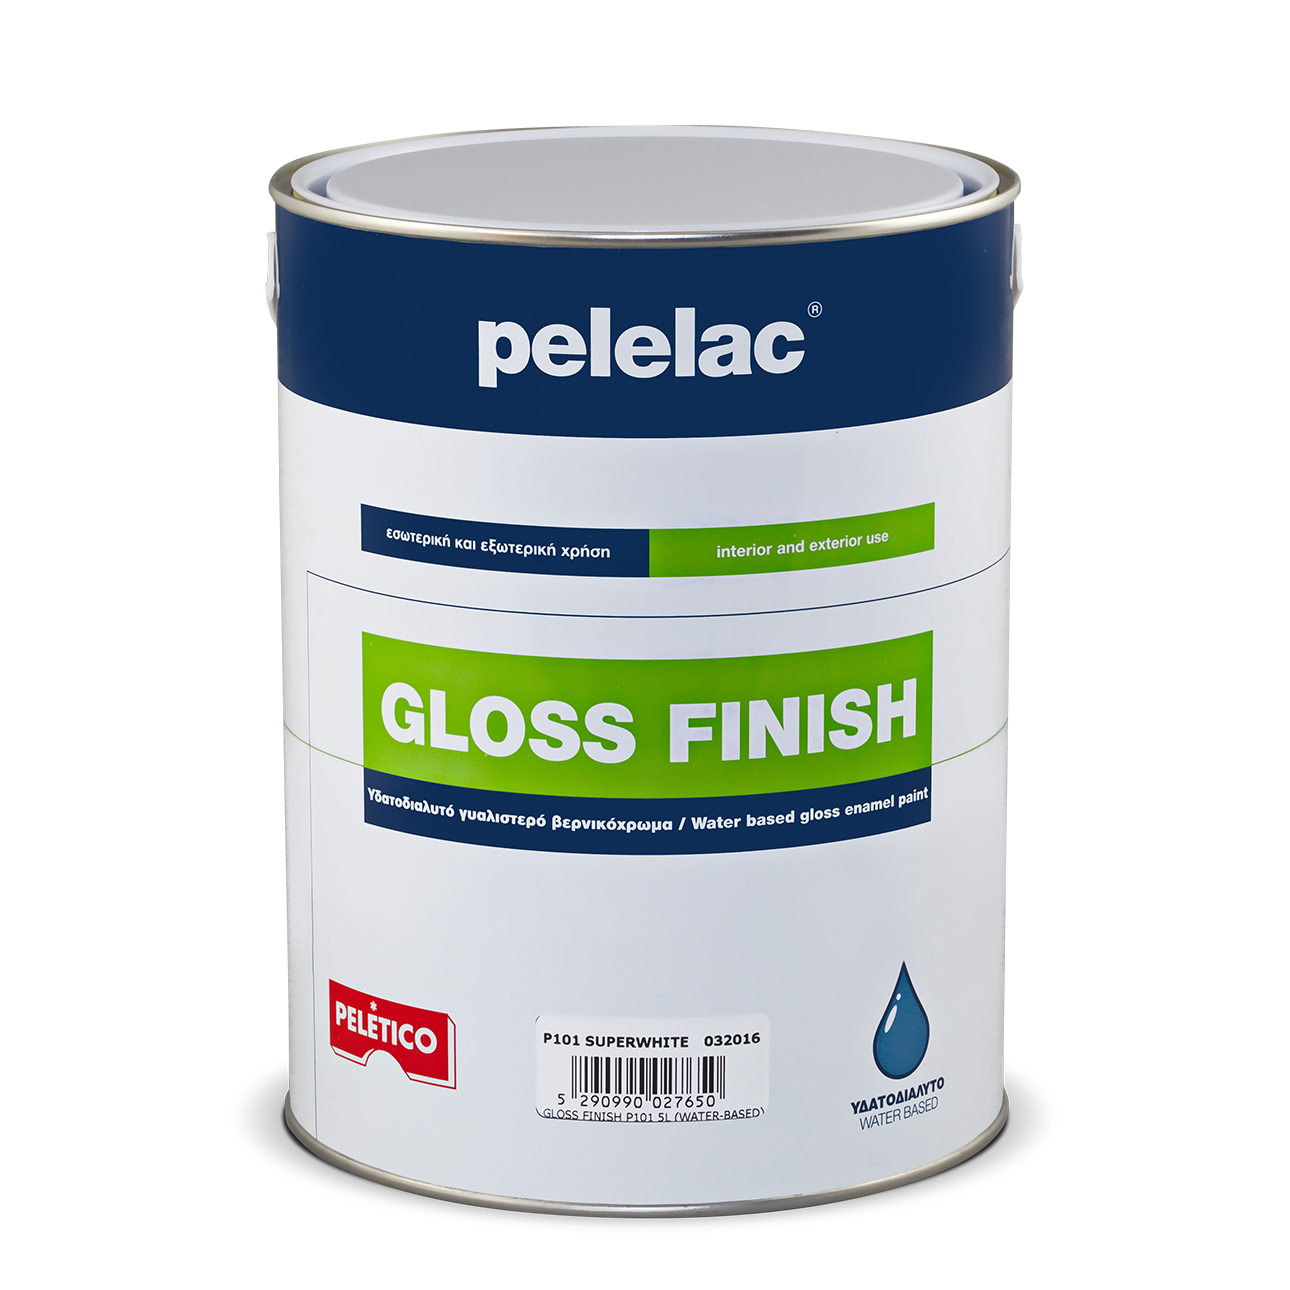 PELELAC® GLOSS FINISH SUPERWHITE P101 0.75L WATER BASED